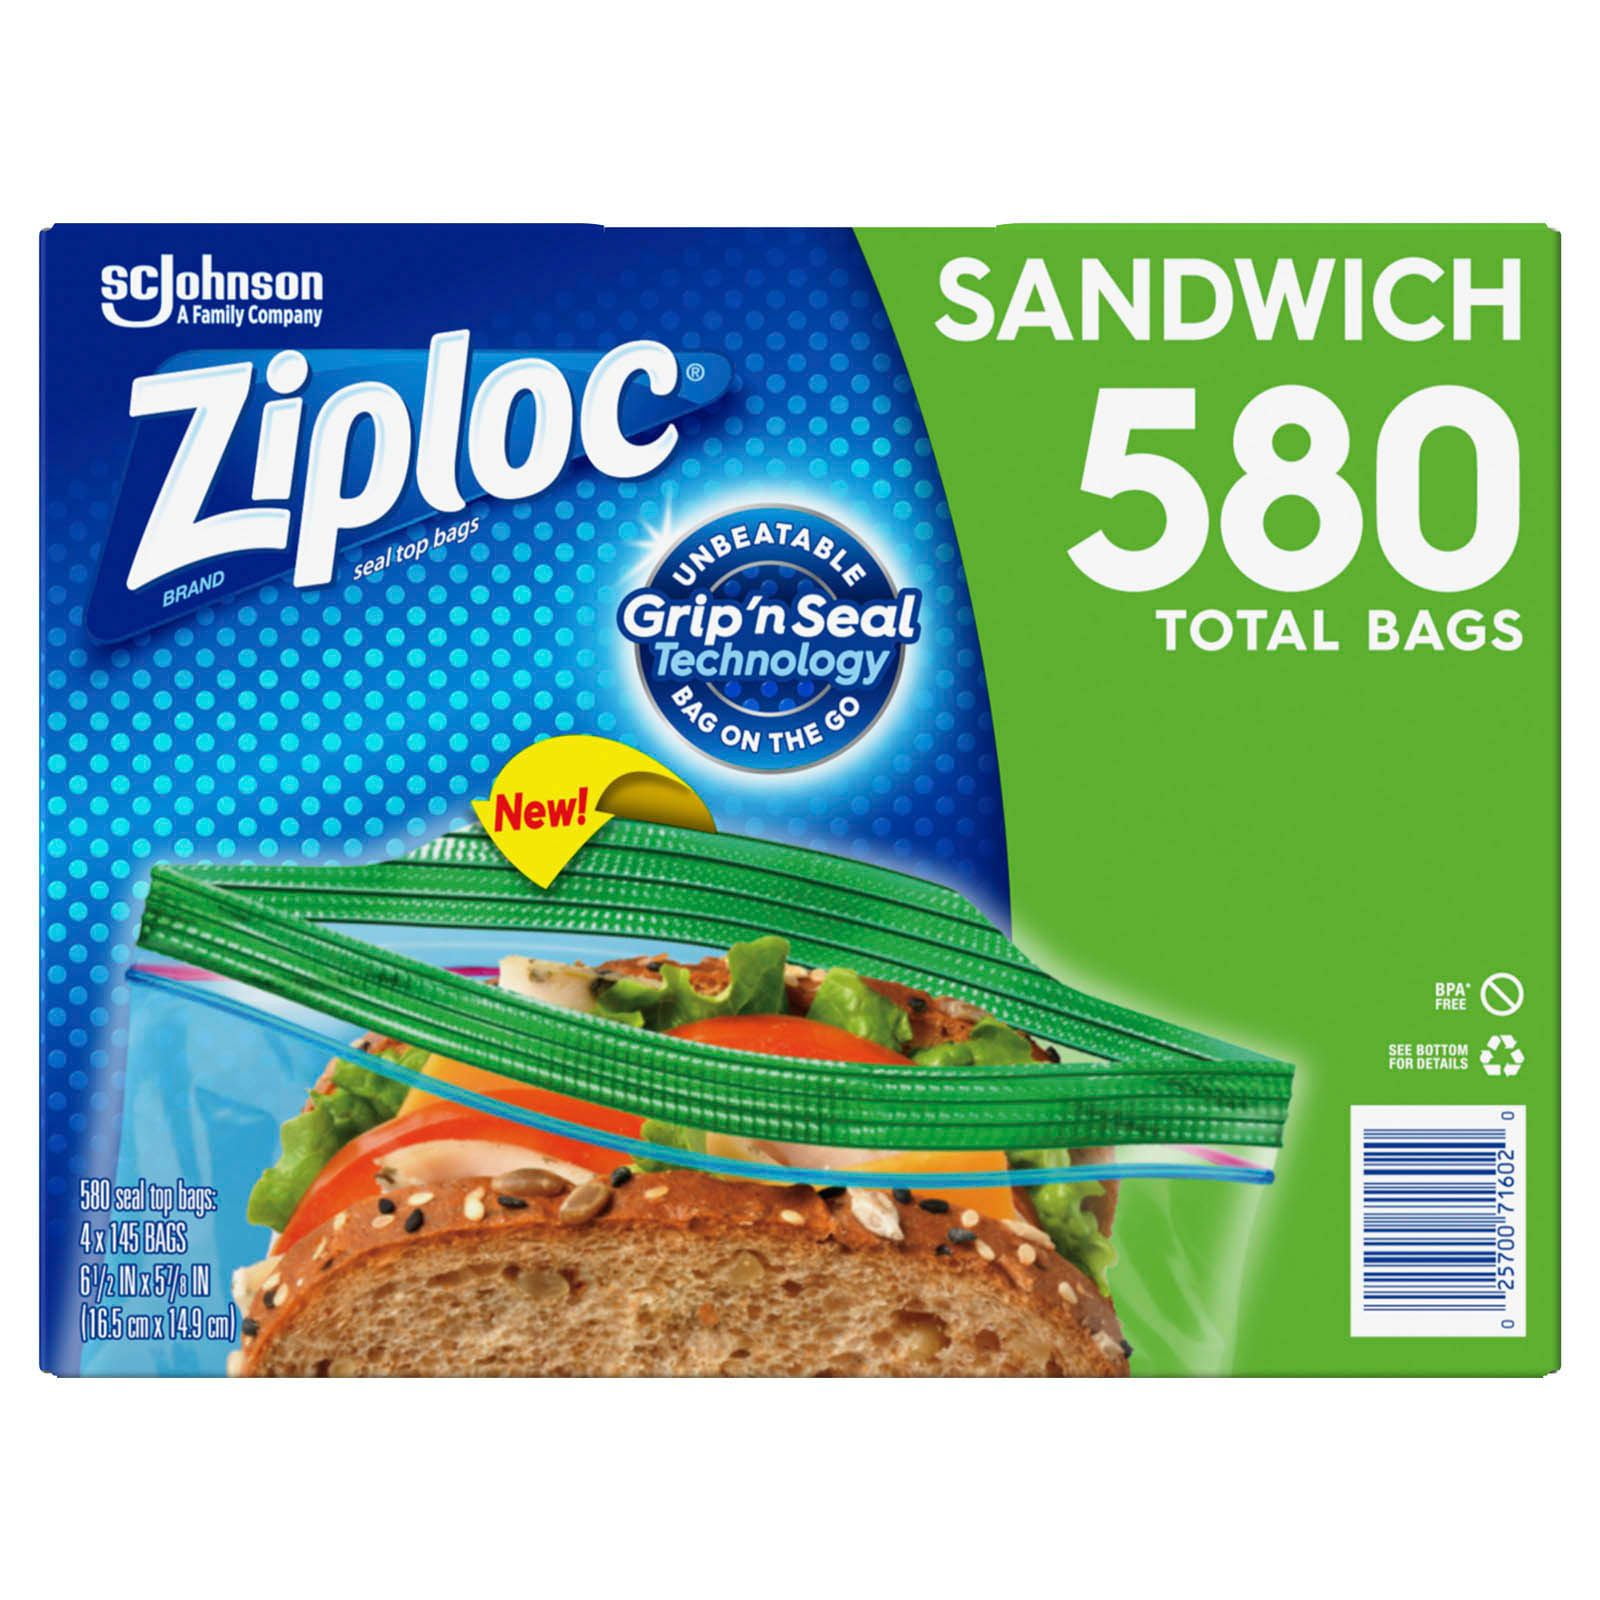 Ziploc Food Seal Top Bags, Variety of Sizes to Choose - Sandwich/ Snack/  Storage